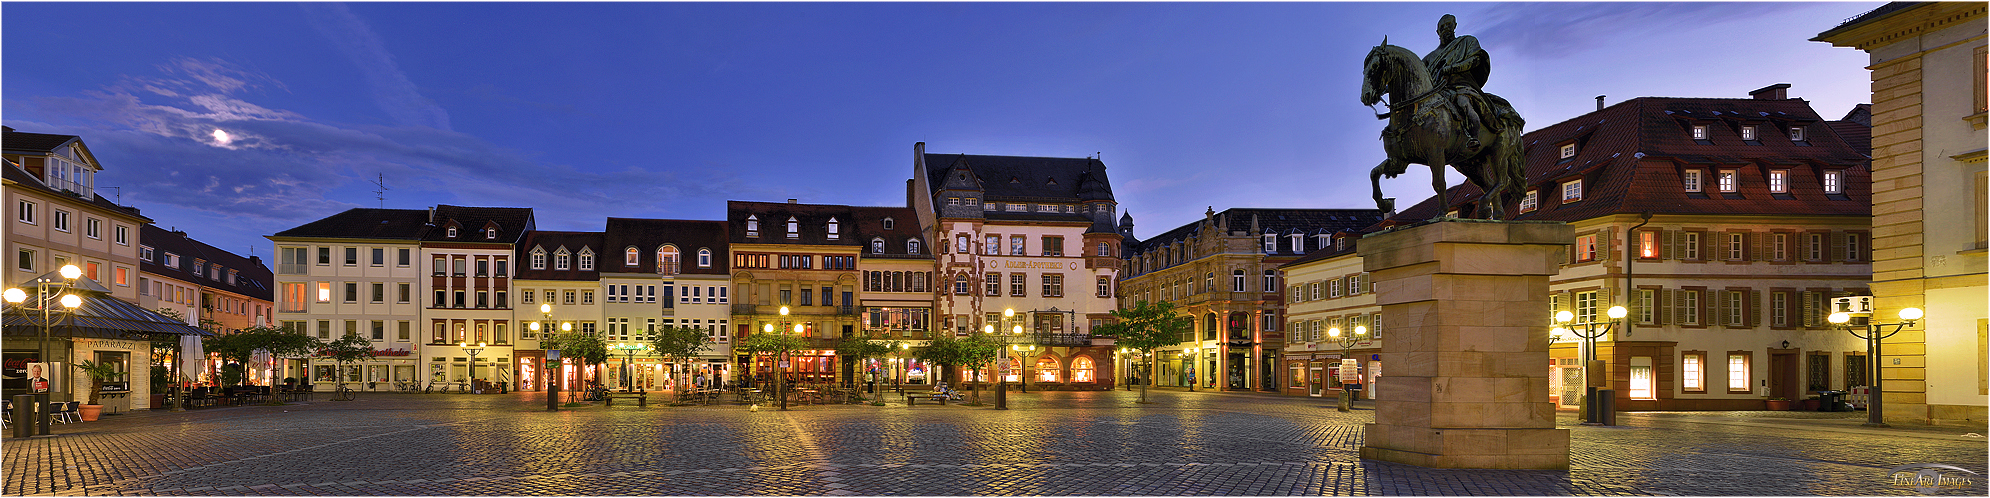 Marktplatz Landau Pfalz